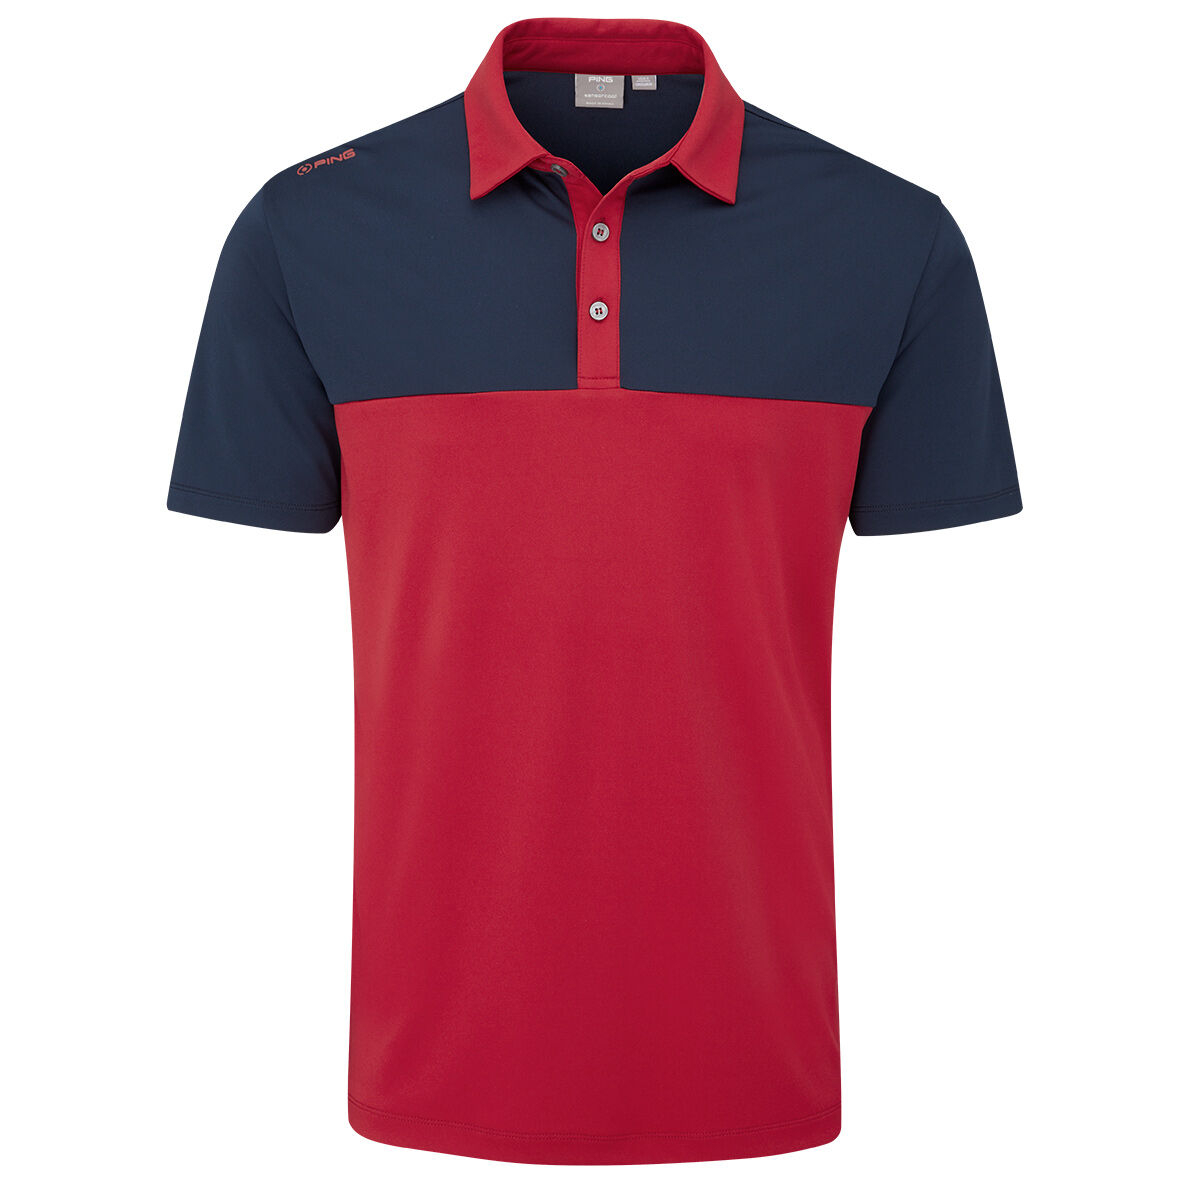 PING Men’s Bodi Panel Golf Polo Shirt, Mens, Rich red/navy, Small | American Golf